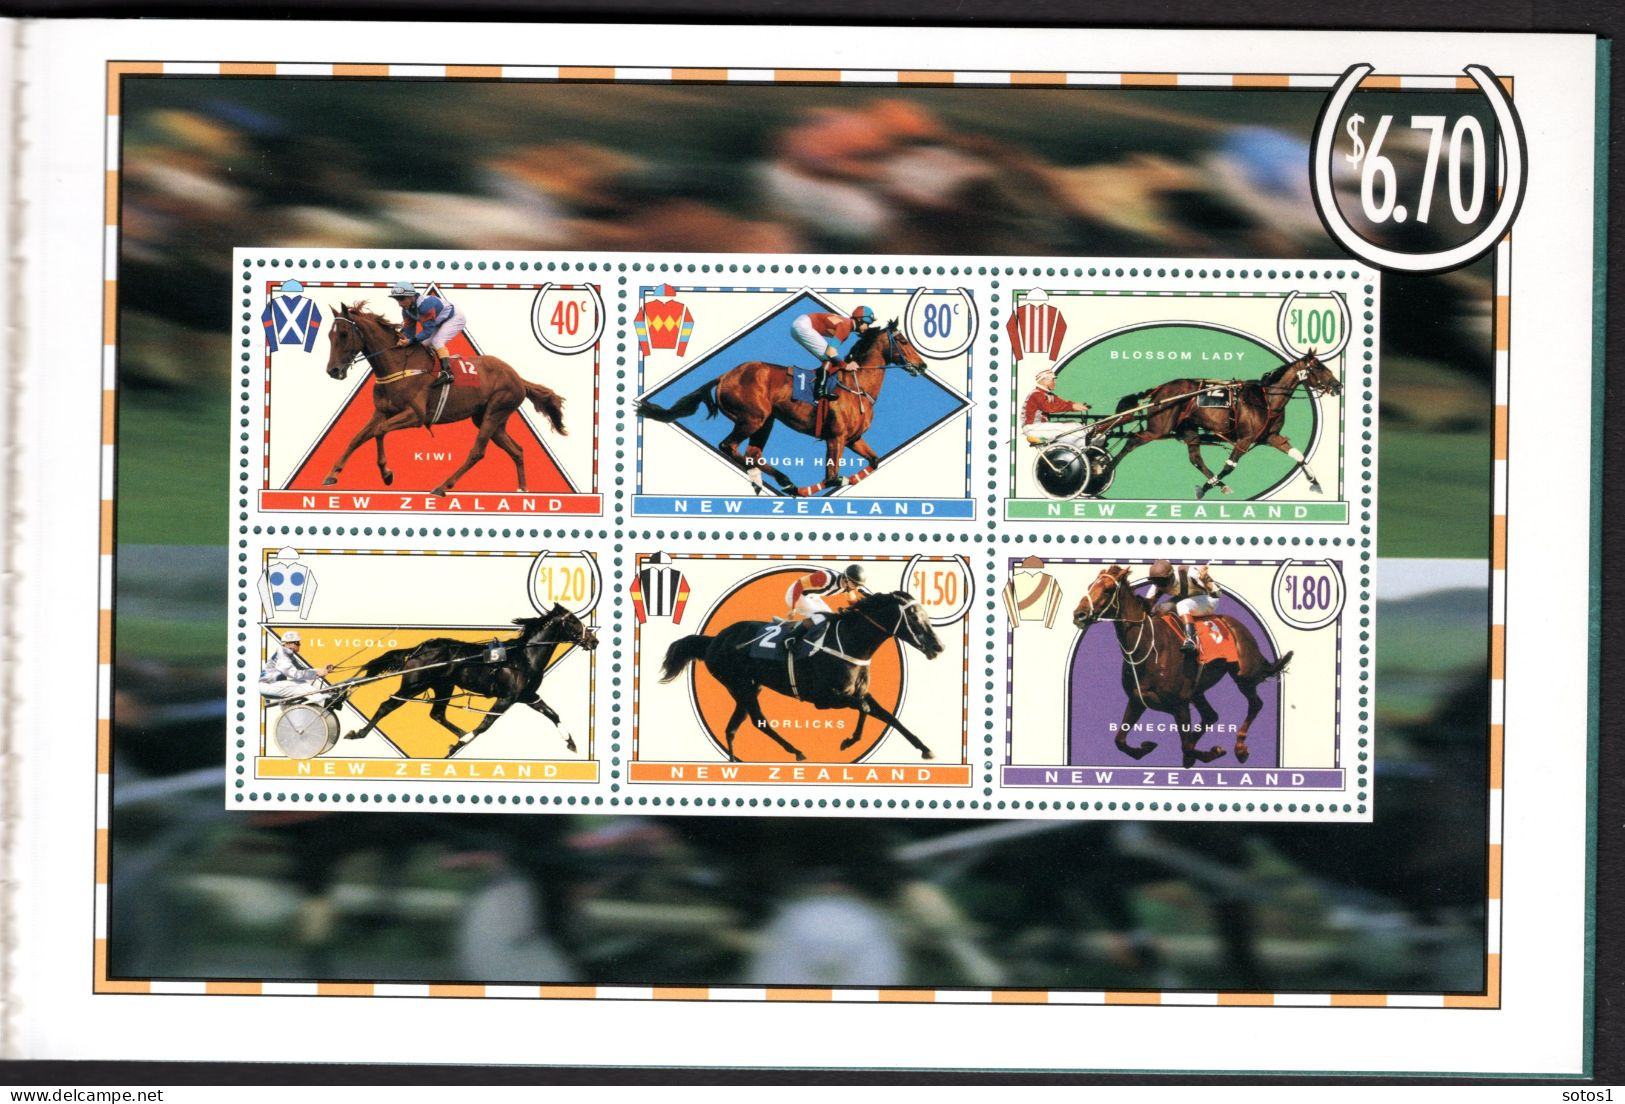 NEW ZEALAND Mi. 1475/1480 MNH Postzegel boekje 1995